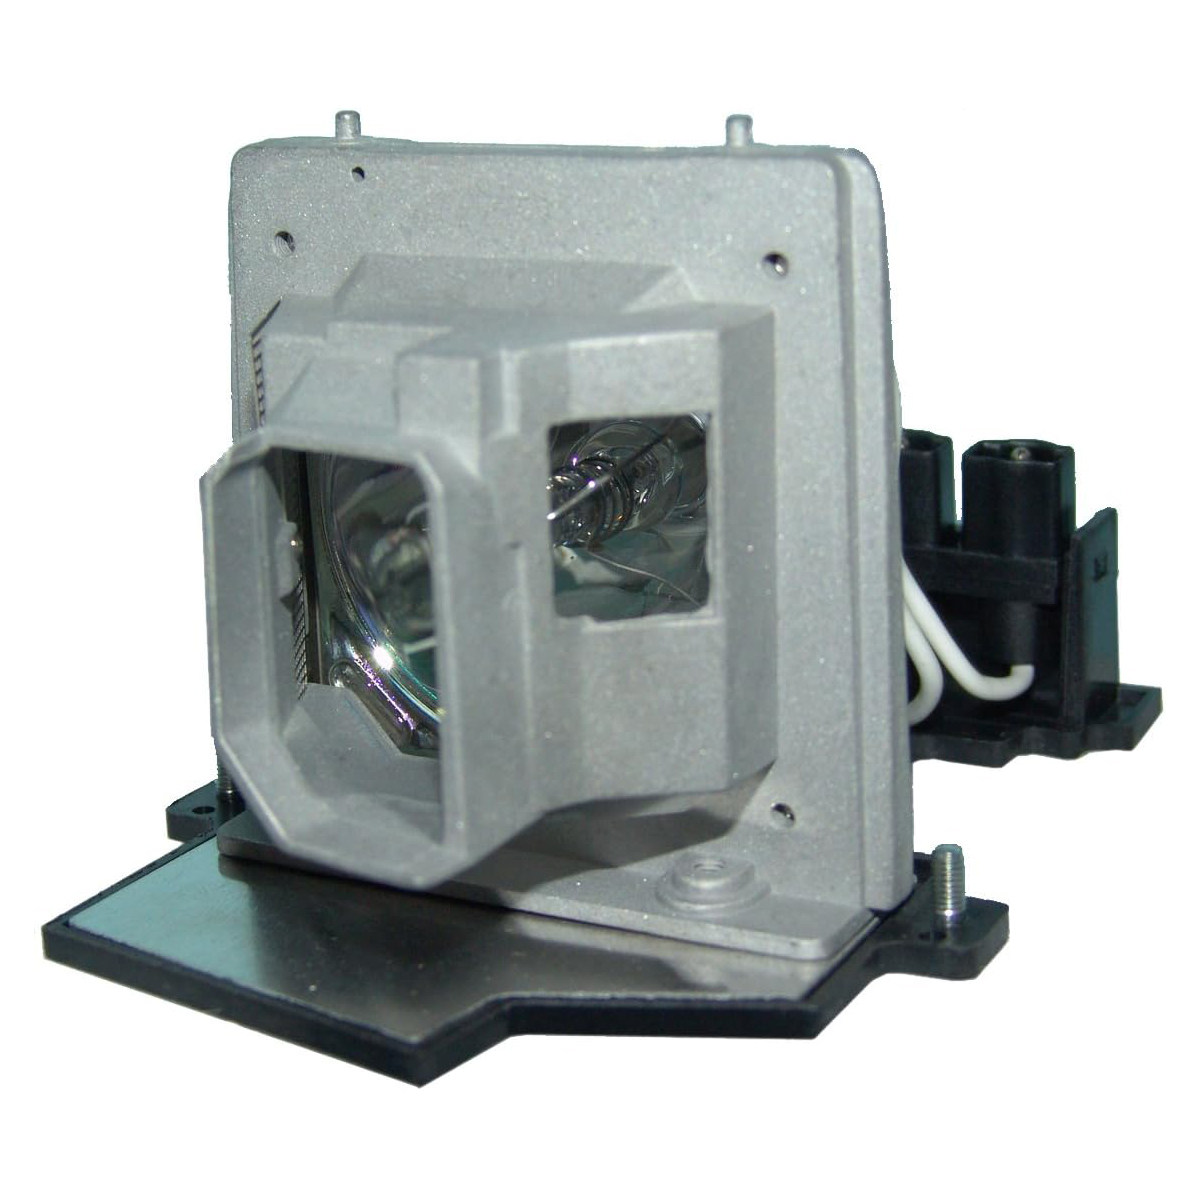 Replacement Projector lamp U6-132/LU6200/000-056 For PLUS U6-132